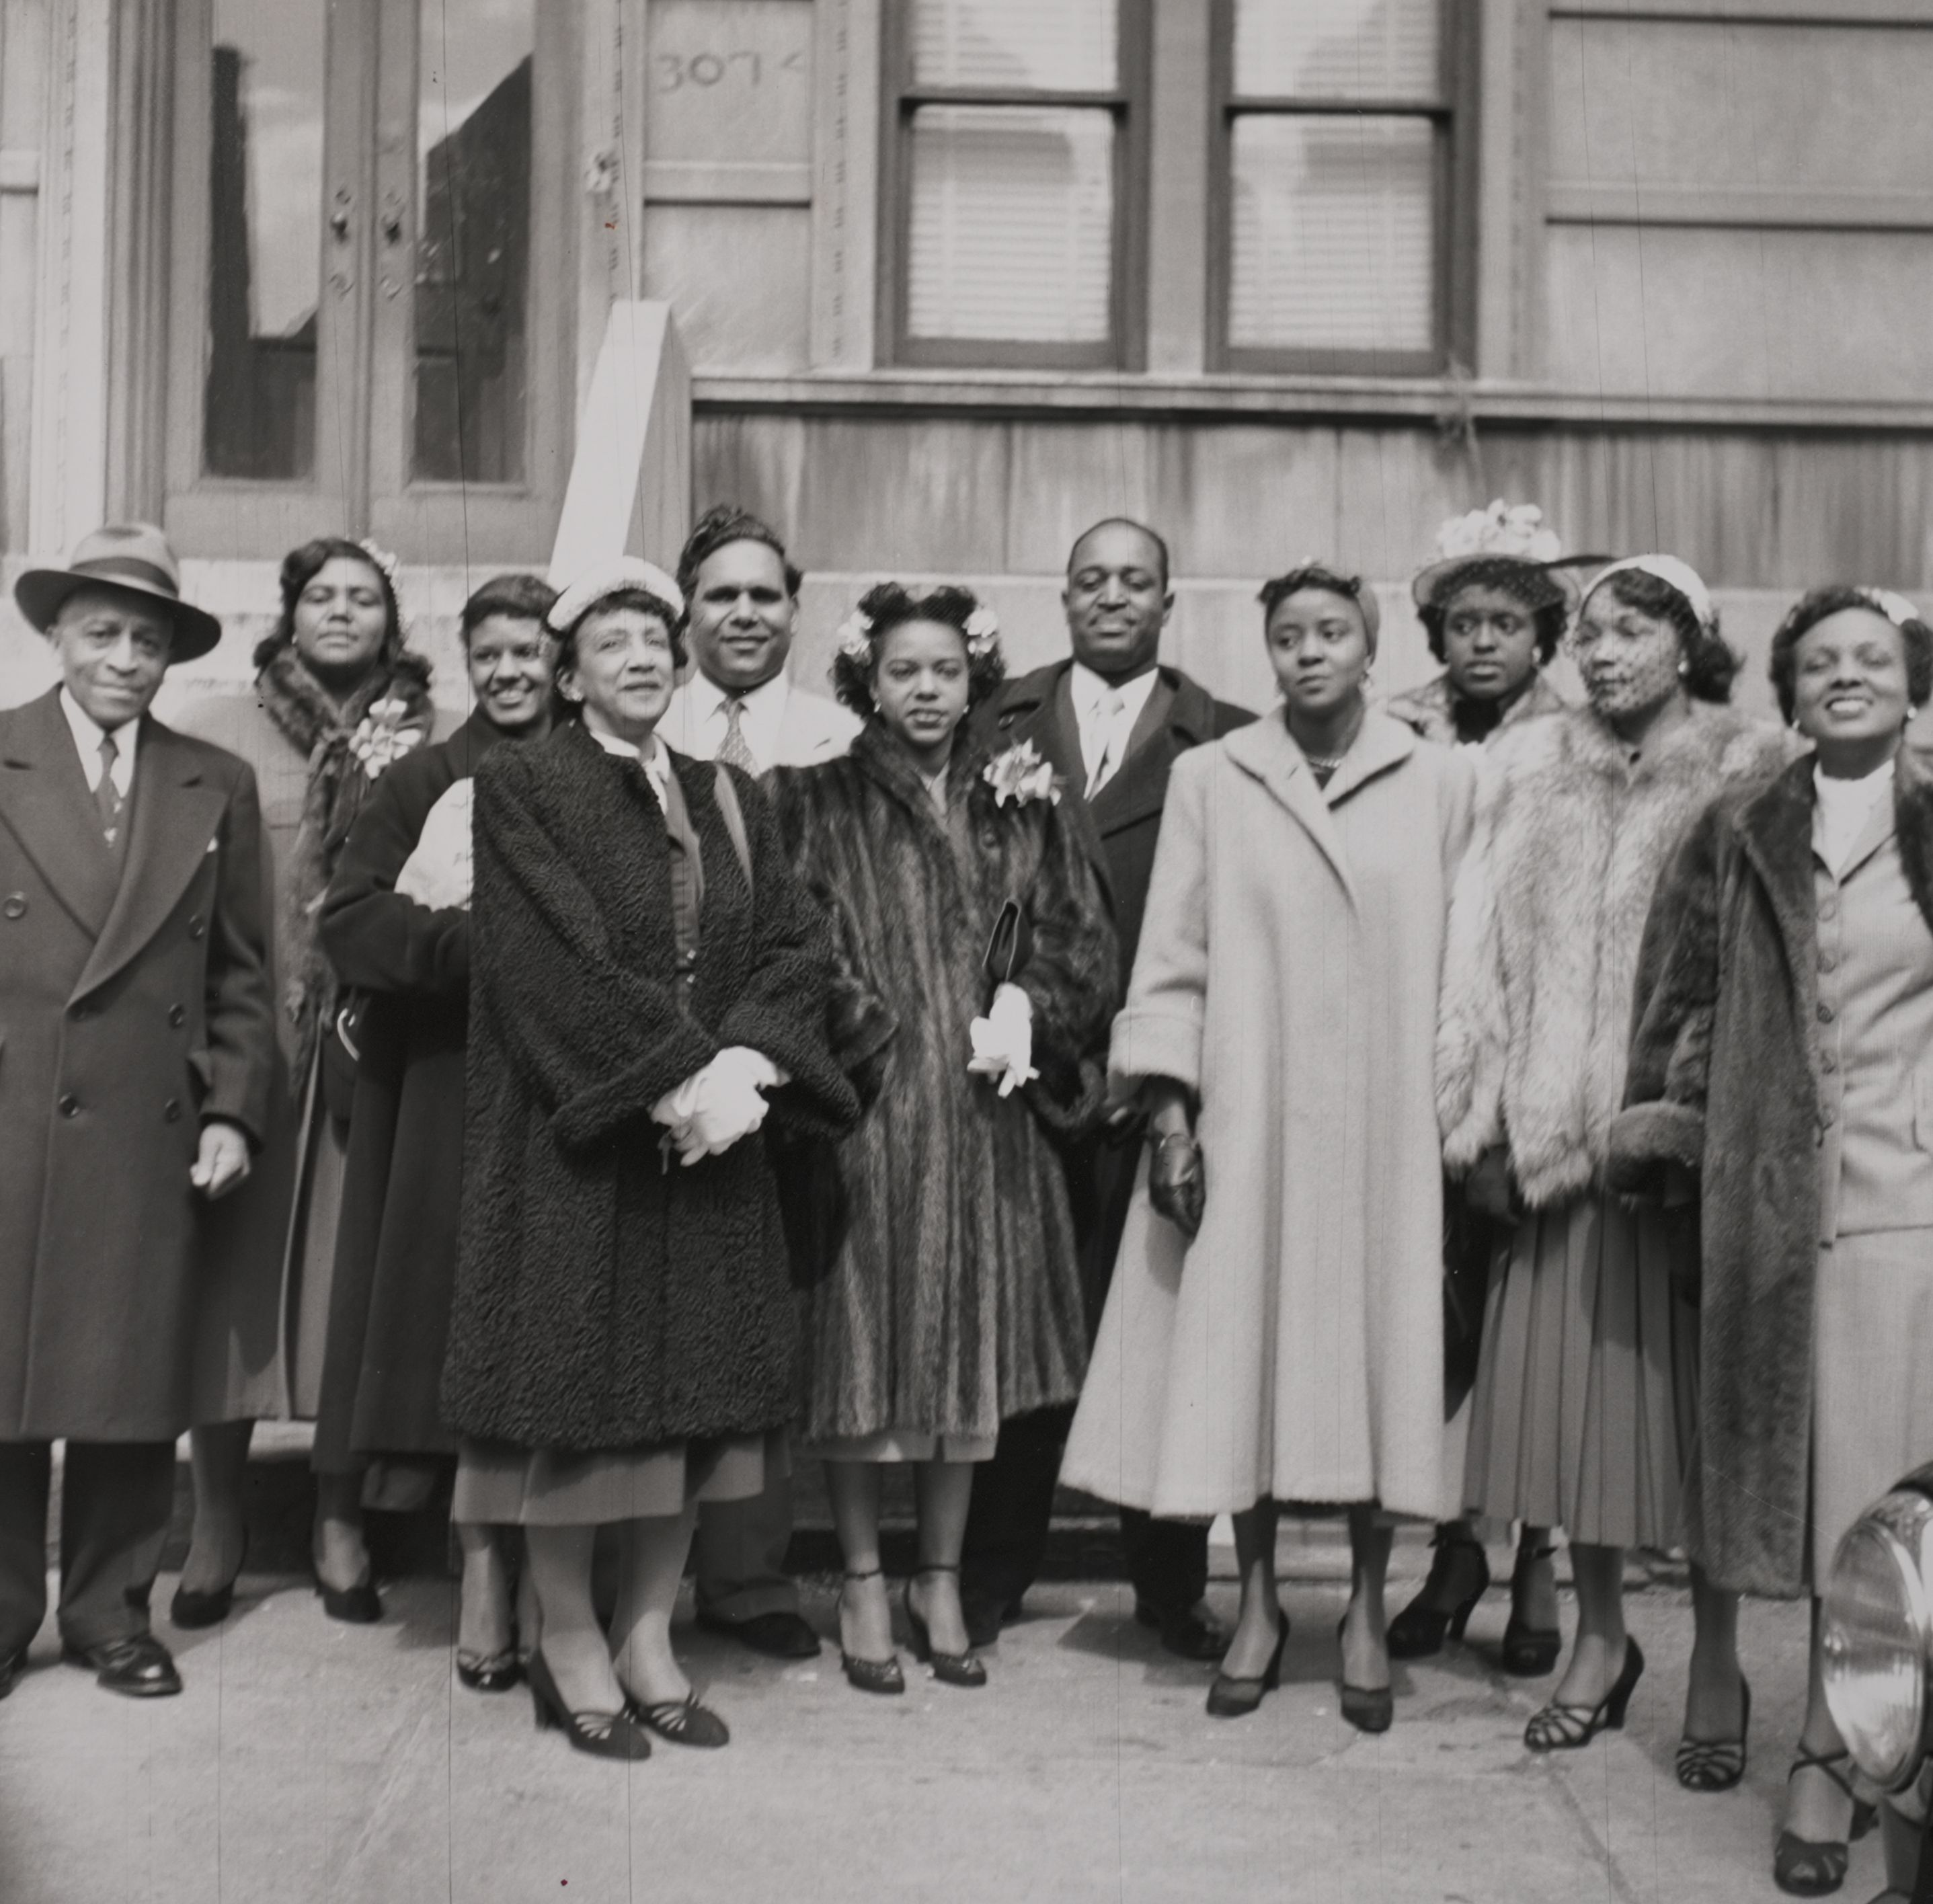 Harold Blair and friends in Harlem, New York City, c.1950